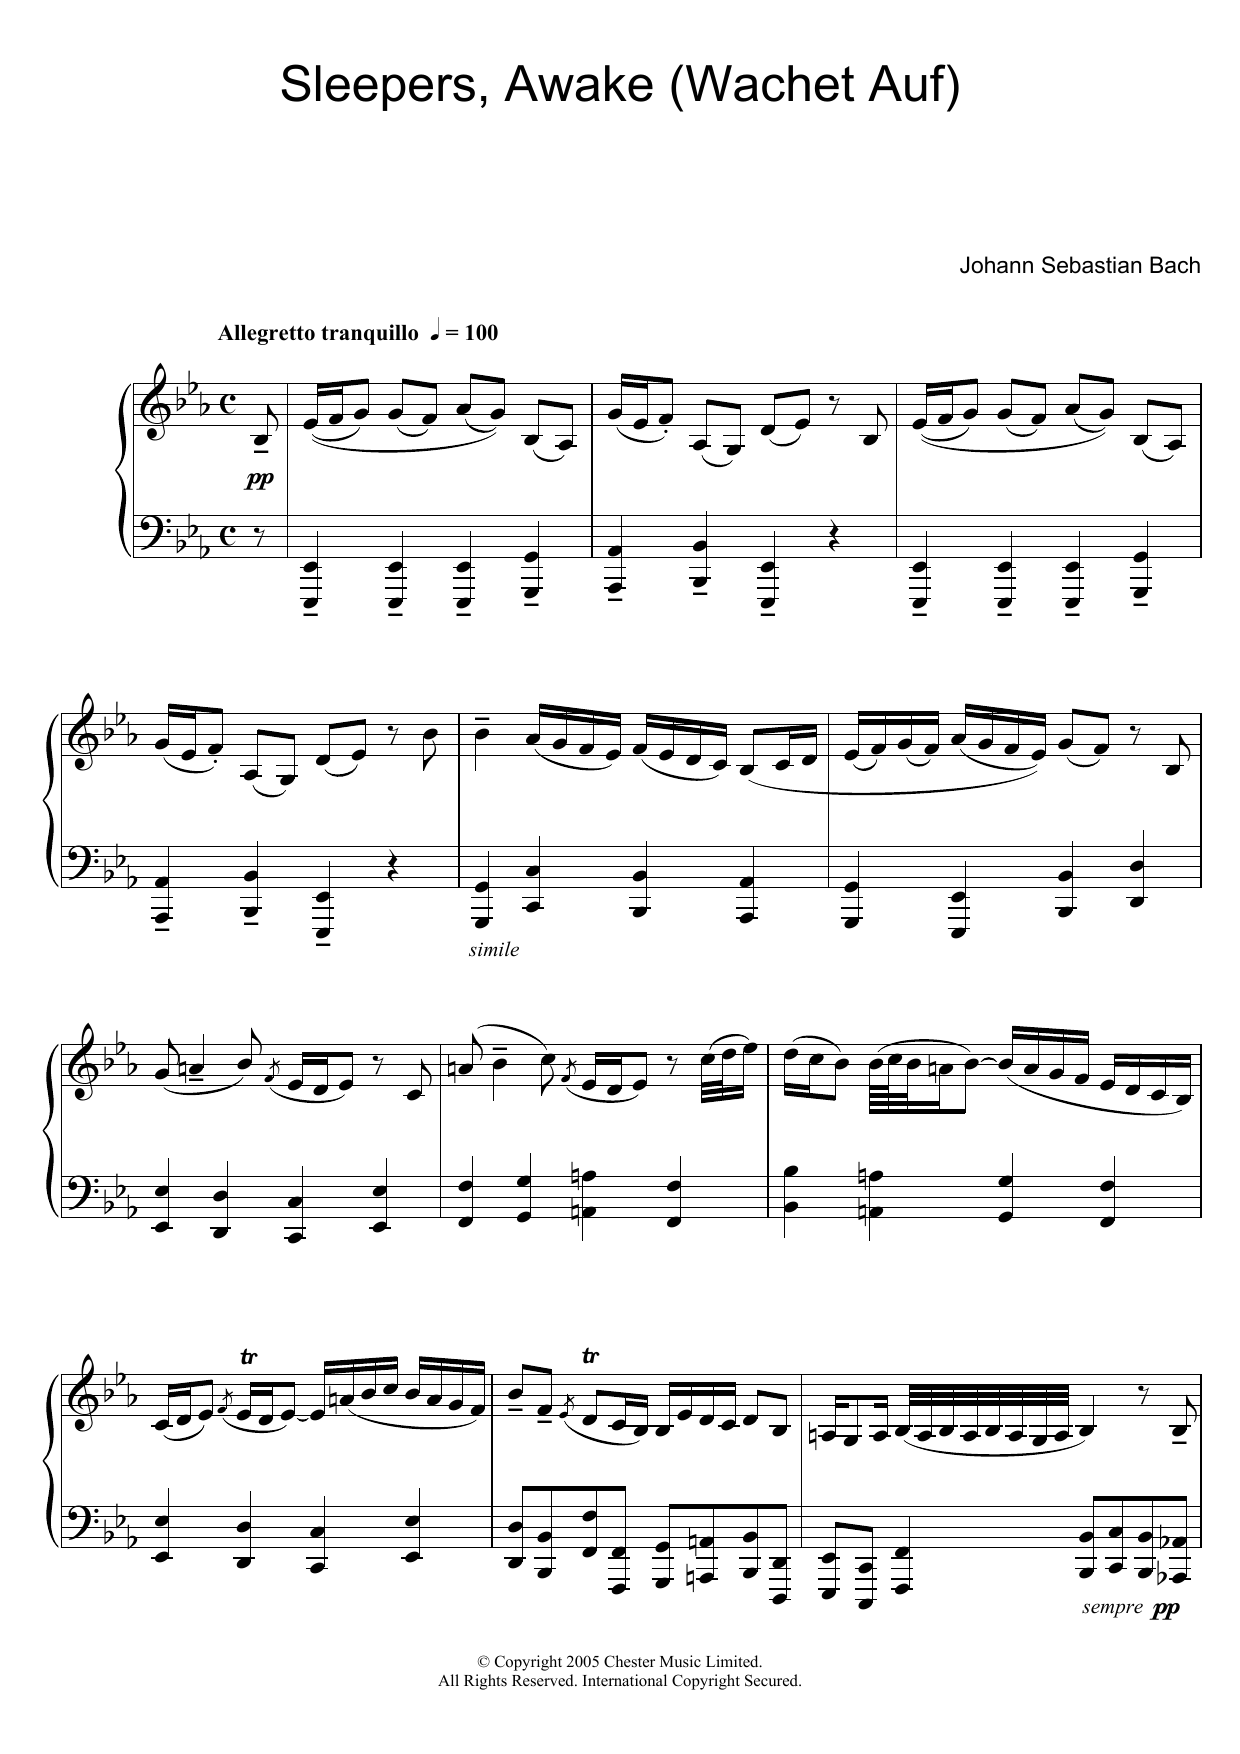 Download Johann Sebastian Bach Sleepers, Awake (Wachet Auf) Sheet Music and learn how to play Clarinet PDF digital score in minutes